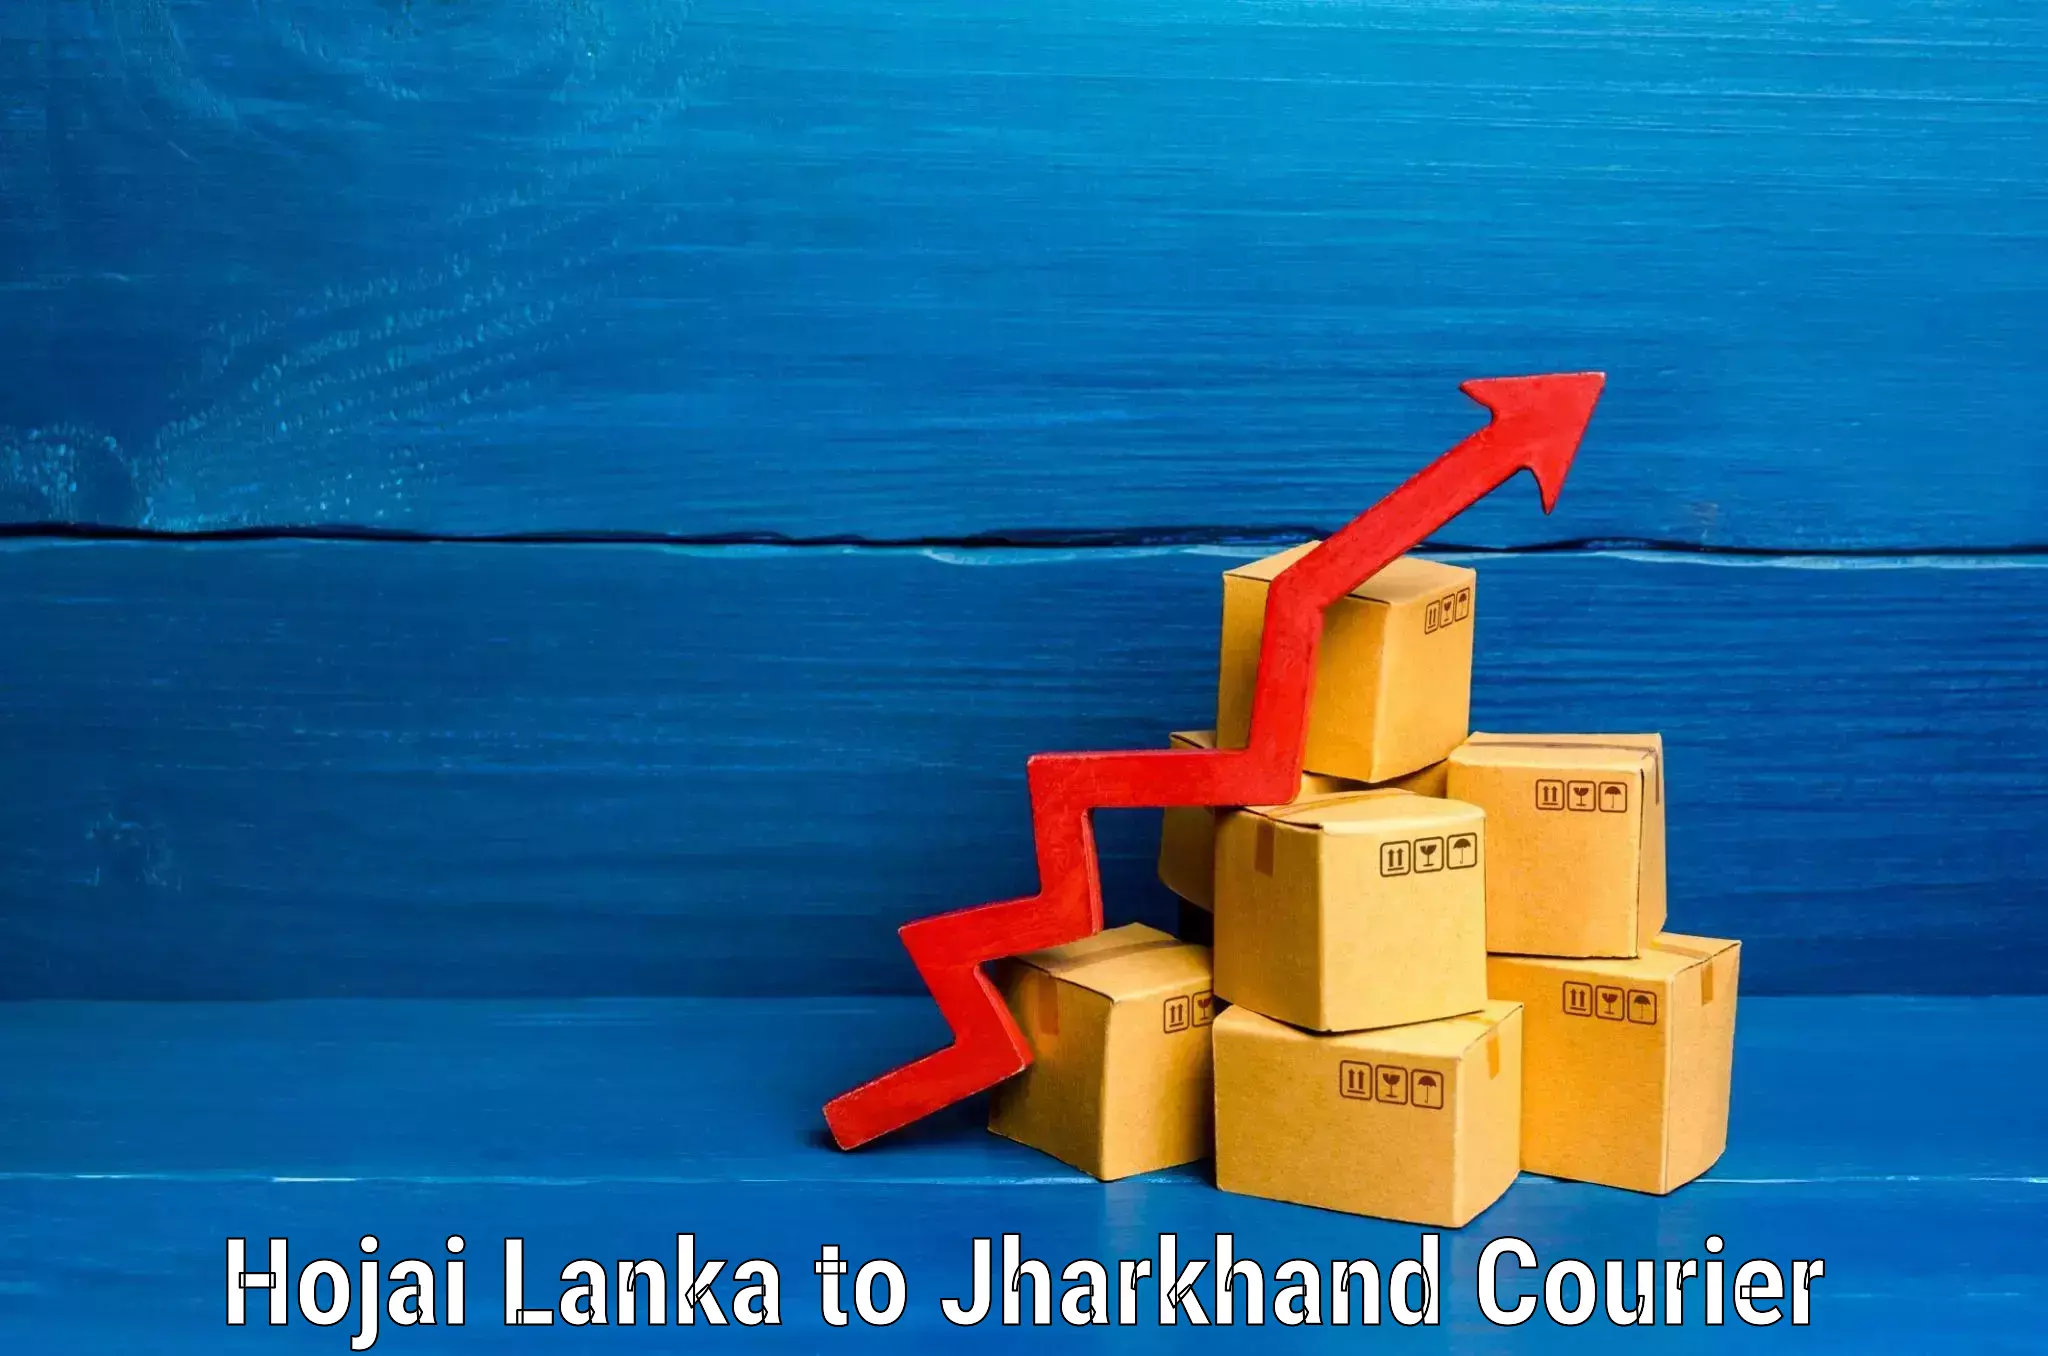 Luggage delivery solutions Hojai Lanka to Bokaro